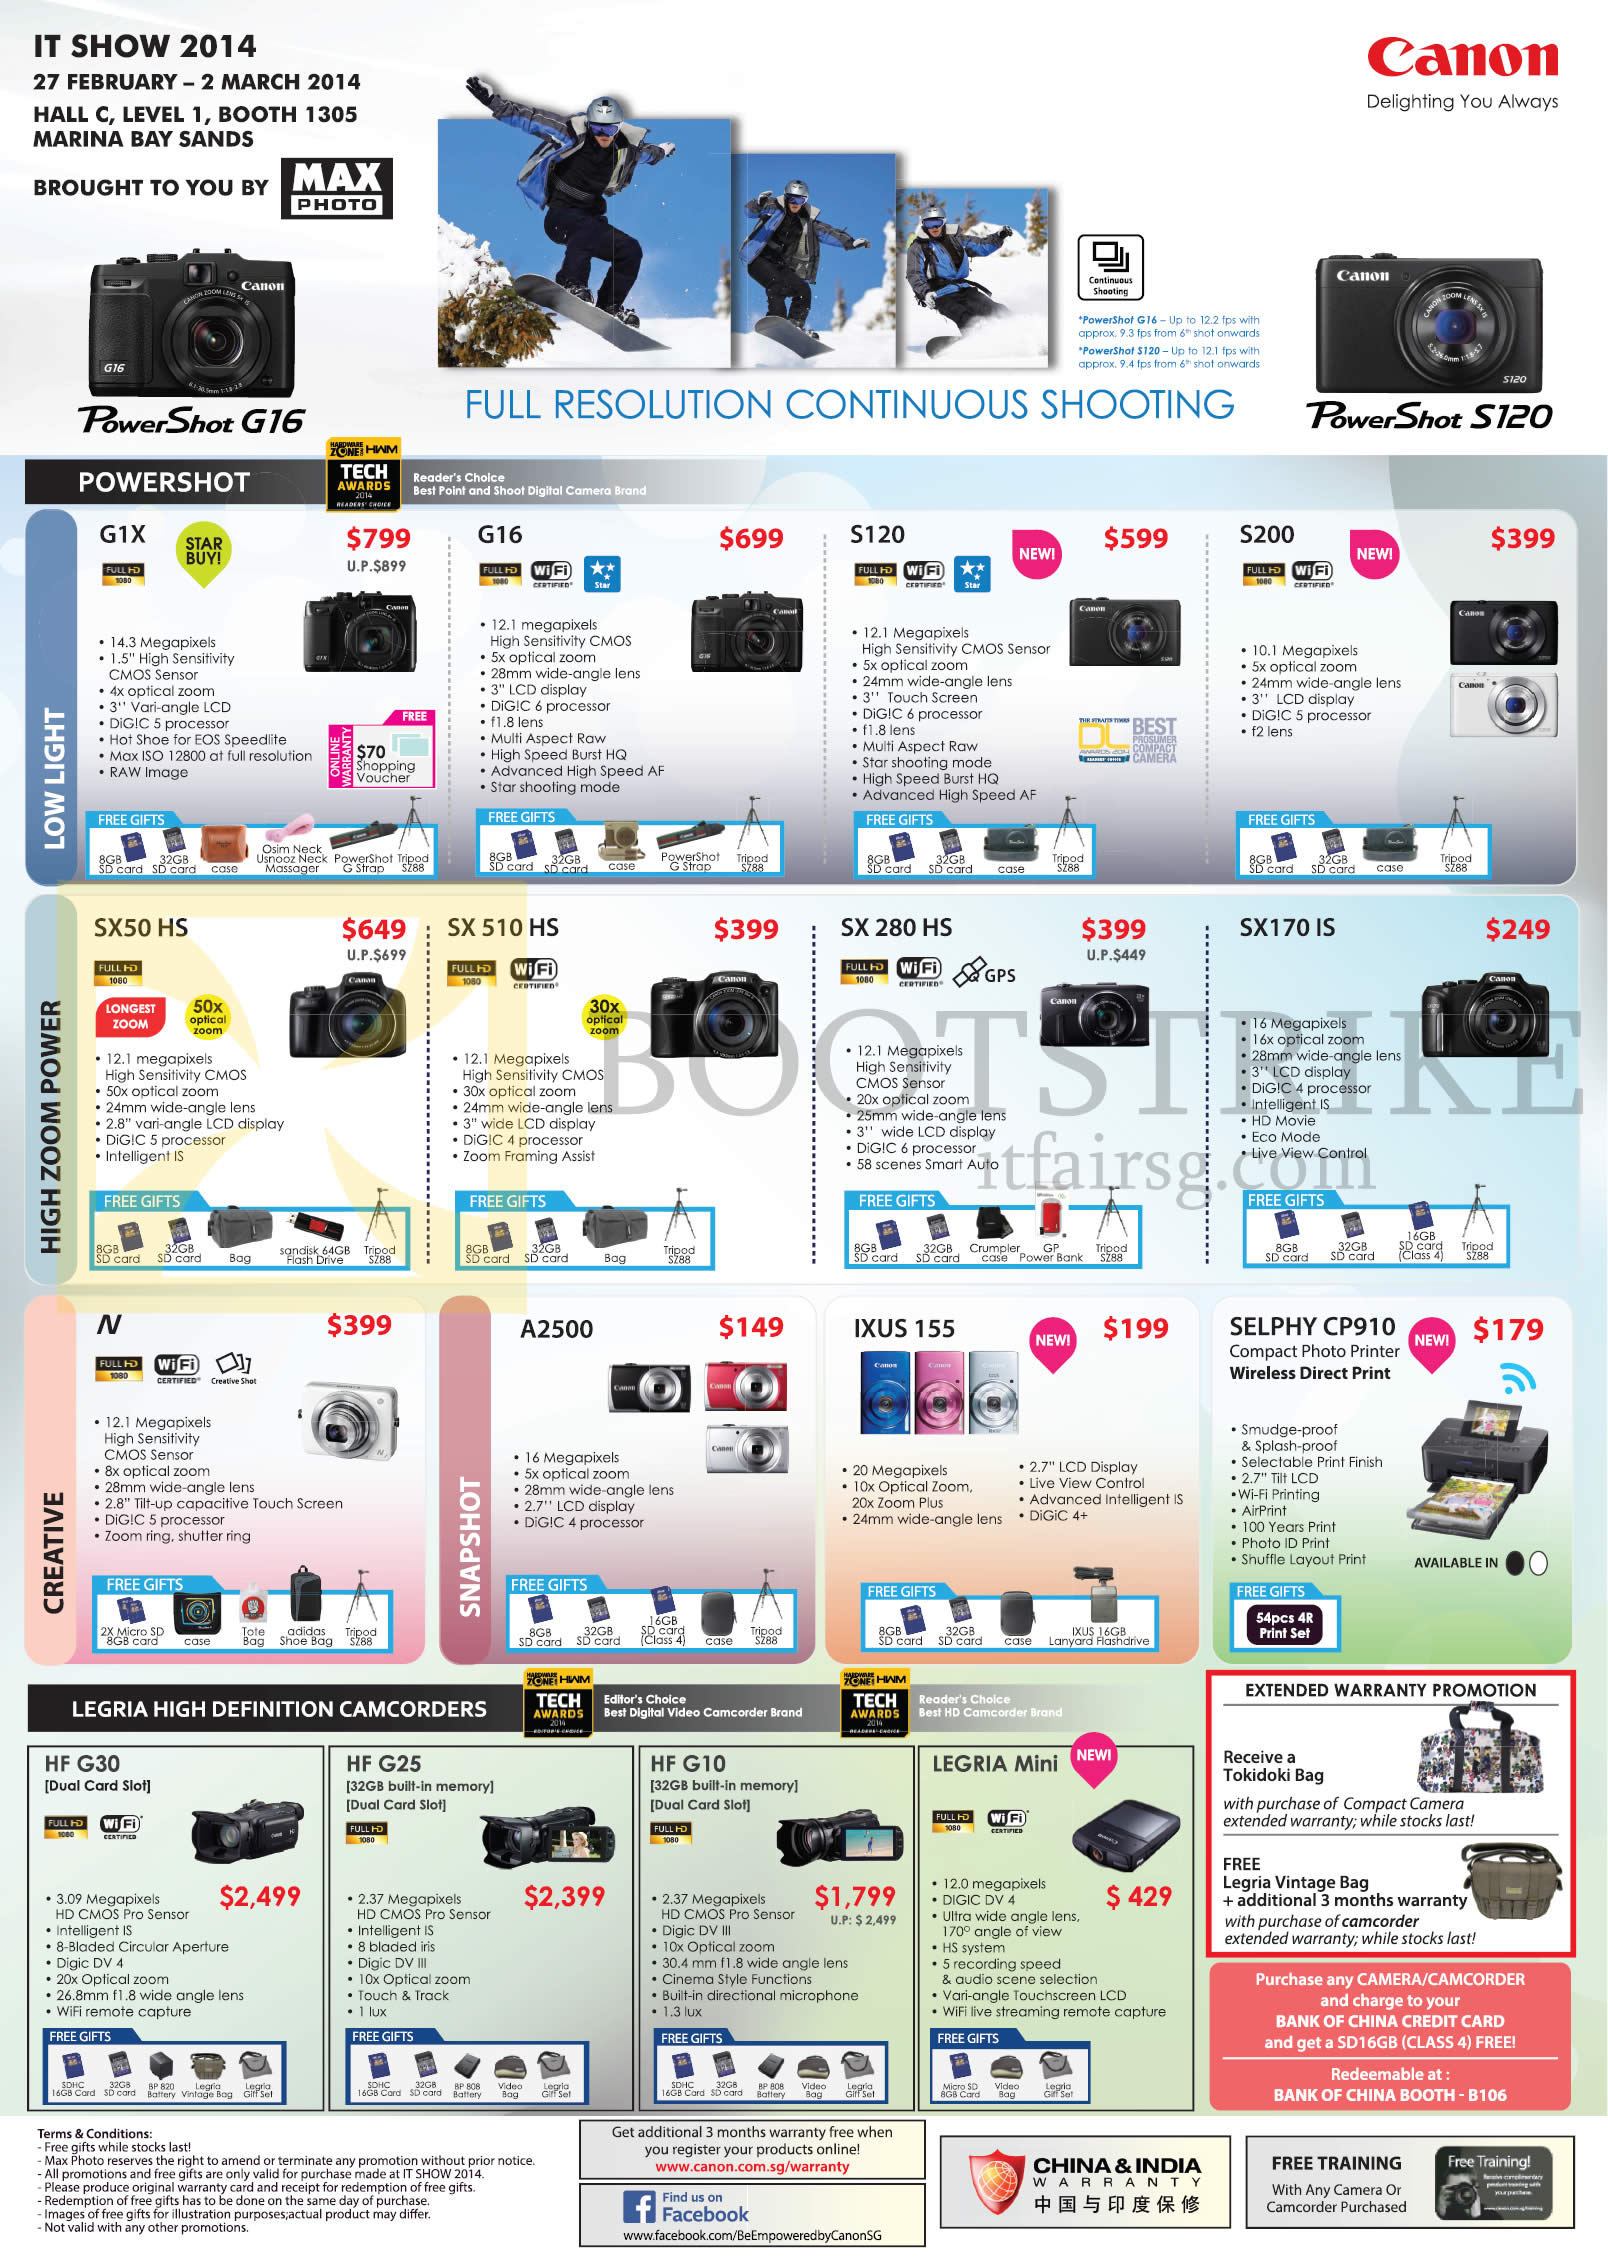 IT SHOW 2014 price list image brochure of Canon Digital Cameras, Camcorders Powershot G1X, G16, S120, S200, SX50HS, SX 510 HS, SX 280 HS, SX 170 IS, N, A2500, Ixus 155, Selphy CP190, HF G30, HF G 25, HF G10, Legria Mini